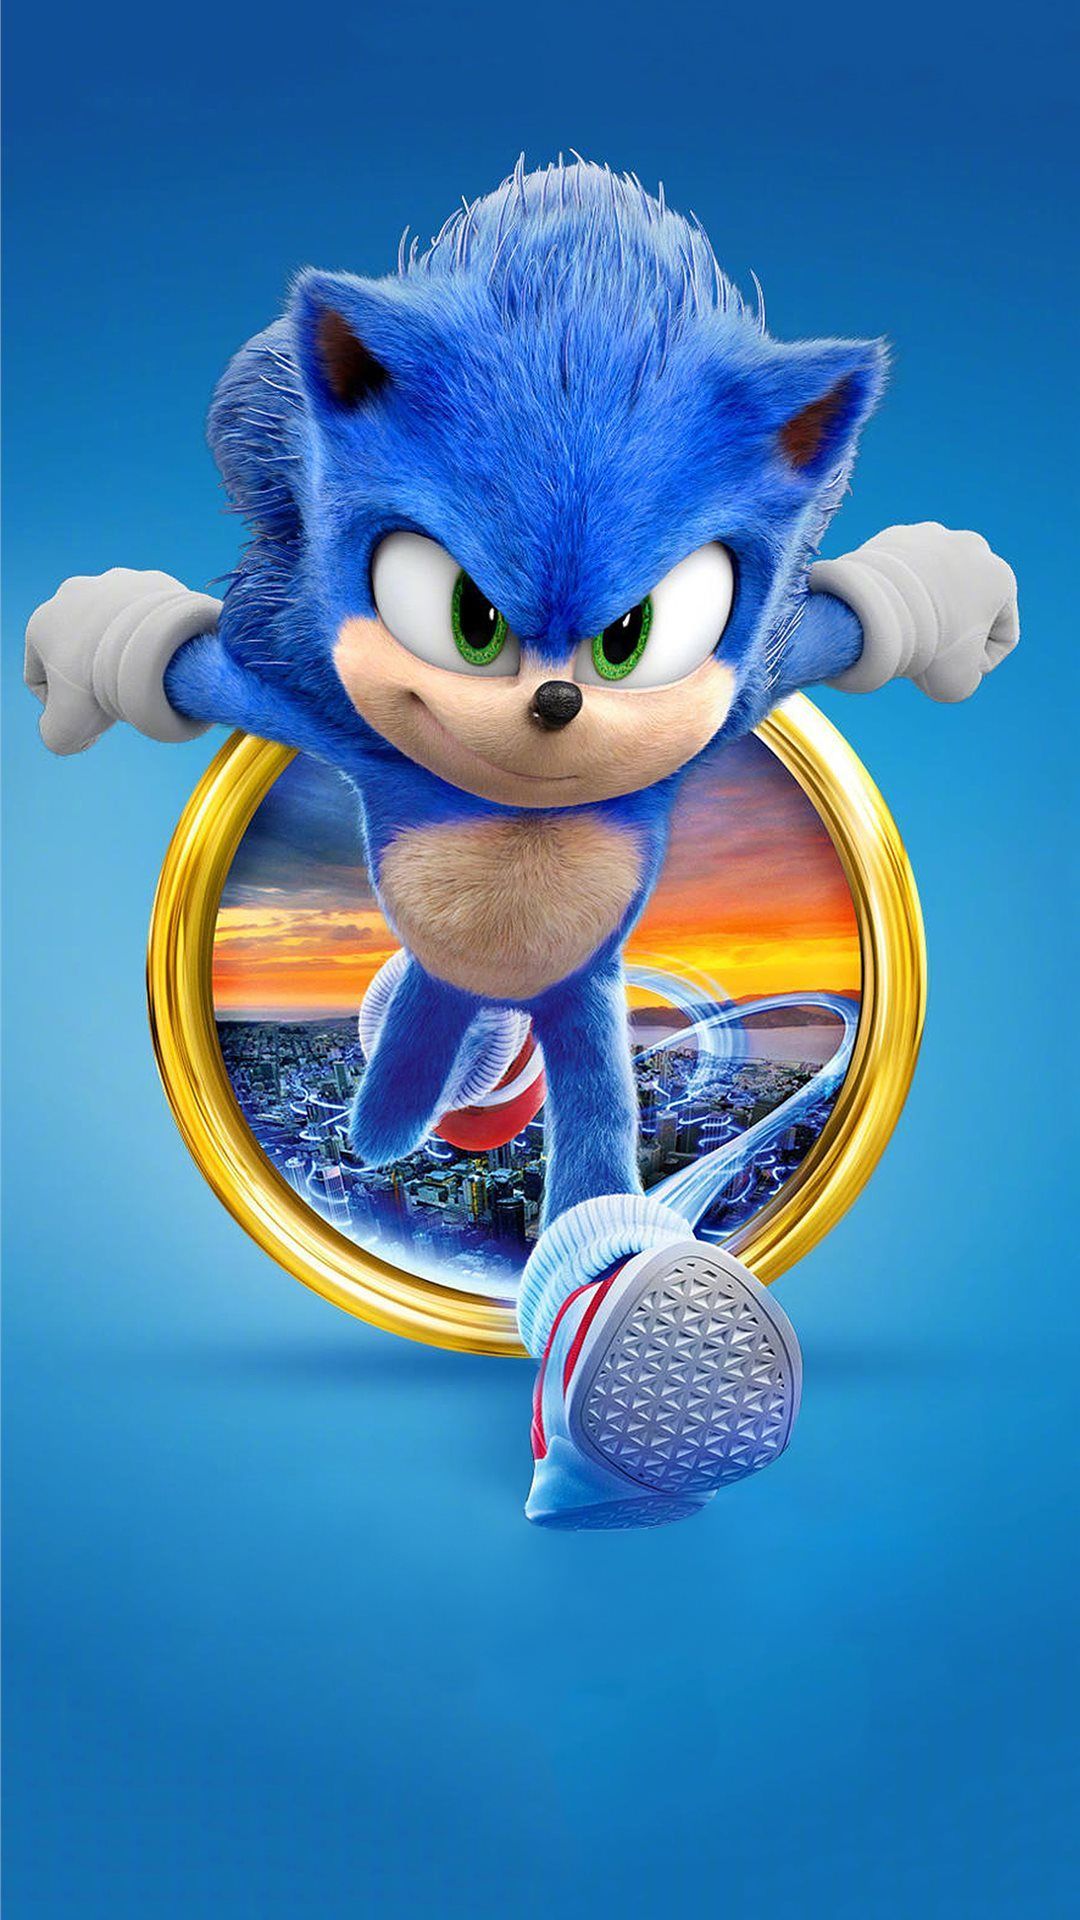 Sonic The Hedgehog 2020 4k #Sonic The Hedgehog #movies Movies K # Sonic. Hedgehog Movie, Sonic The Hedgehog, Sonic